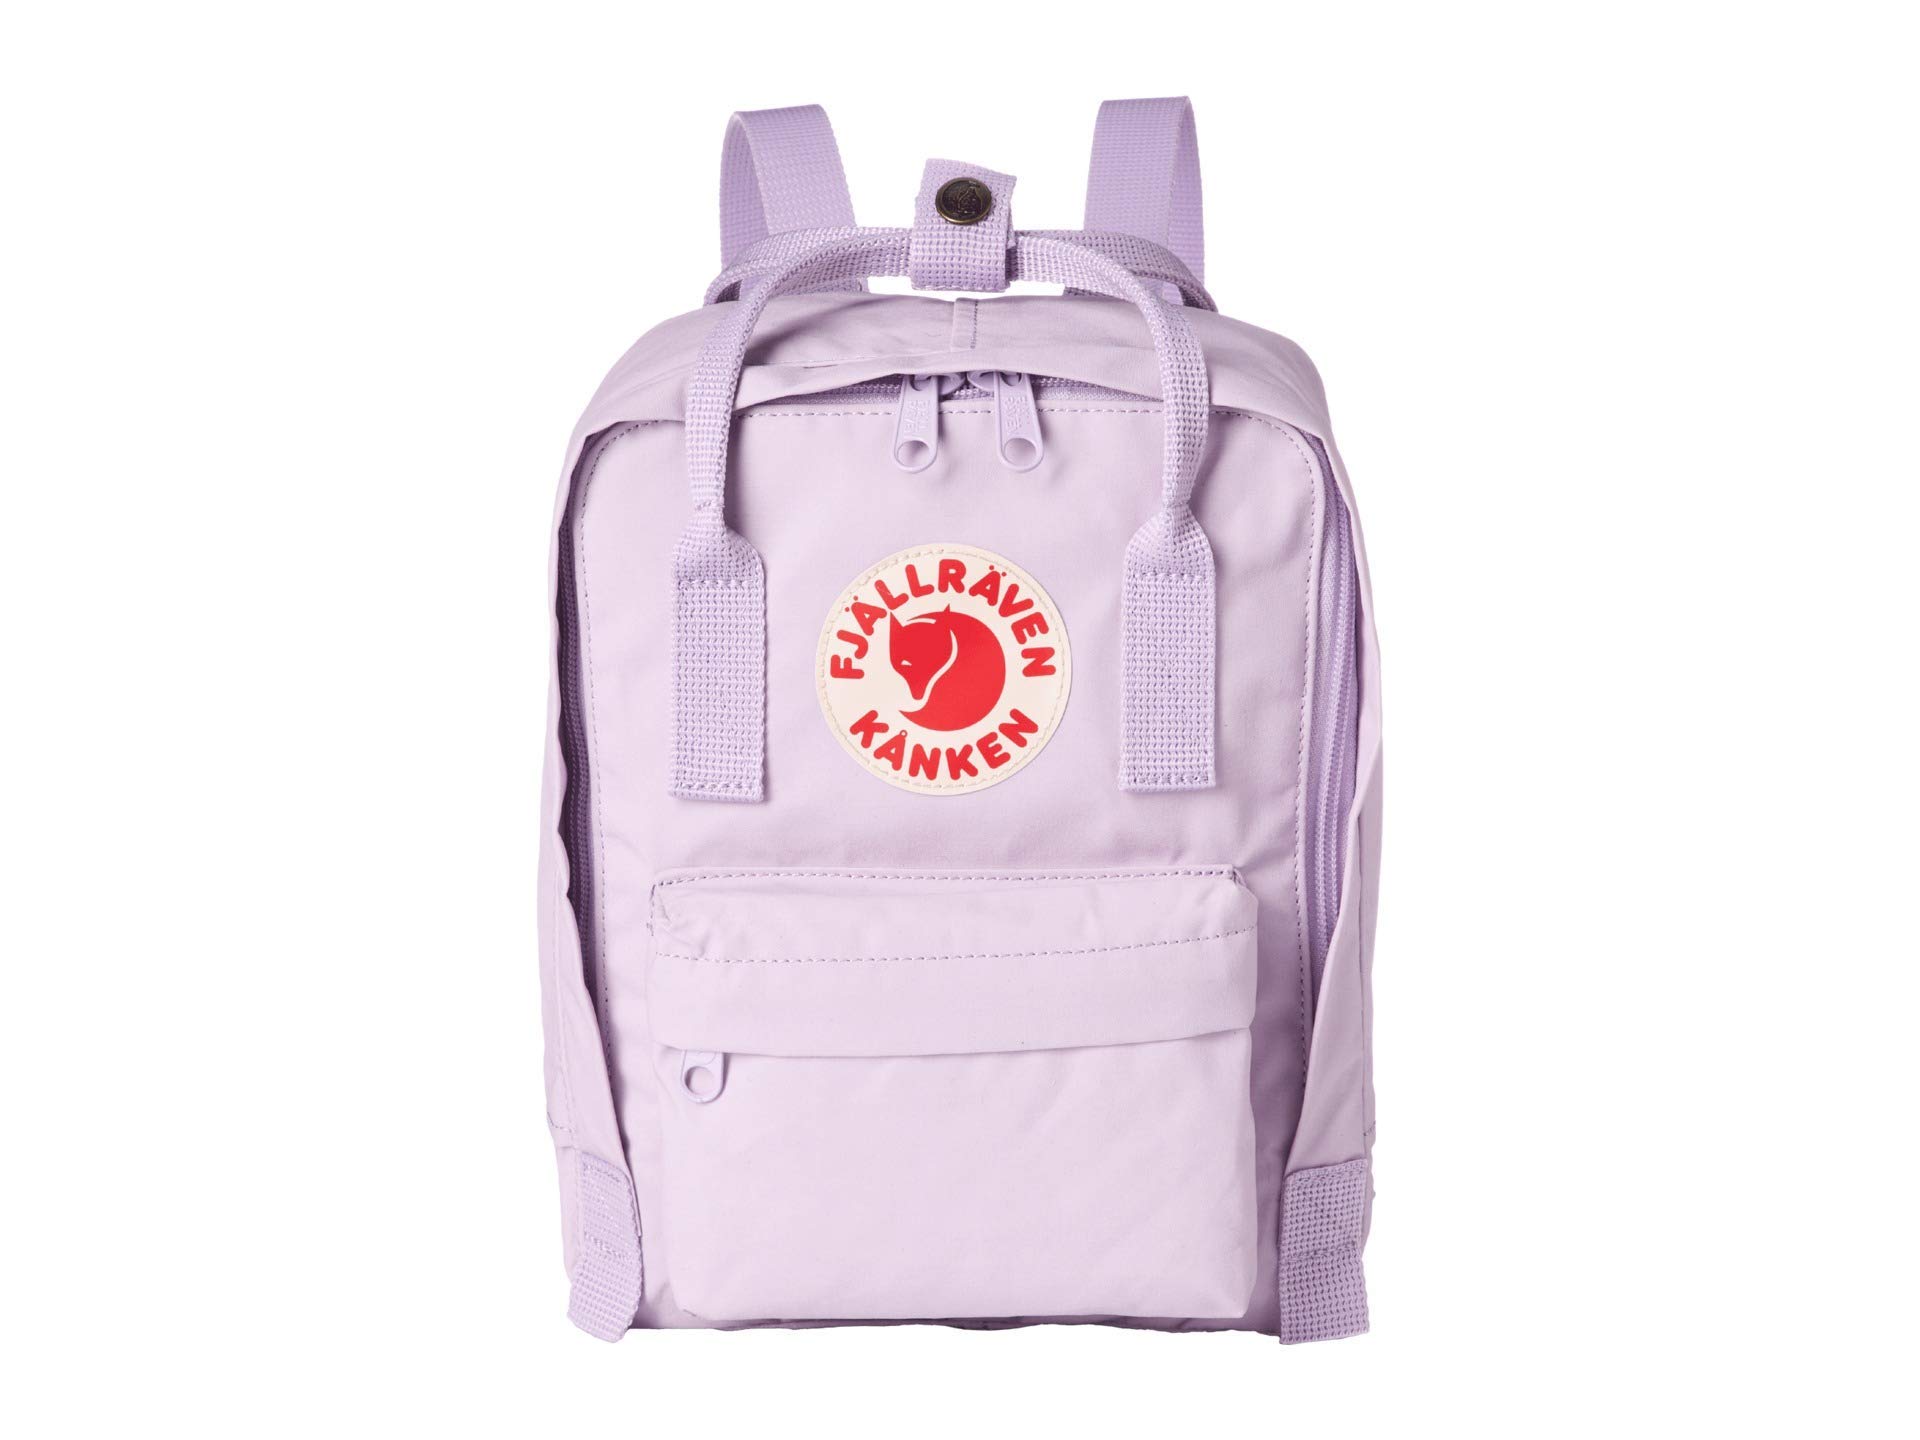 Fjallraven Women's Kanken Mini Backpack, Pastel Lavender, Purple, One Size